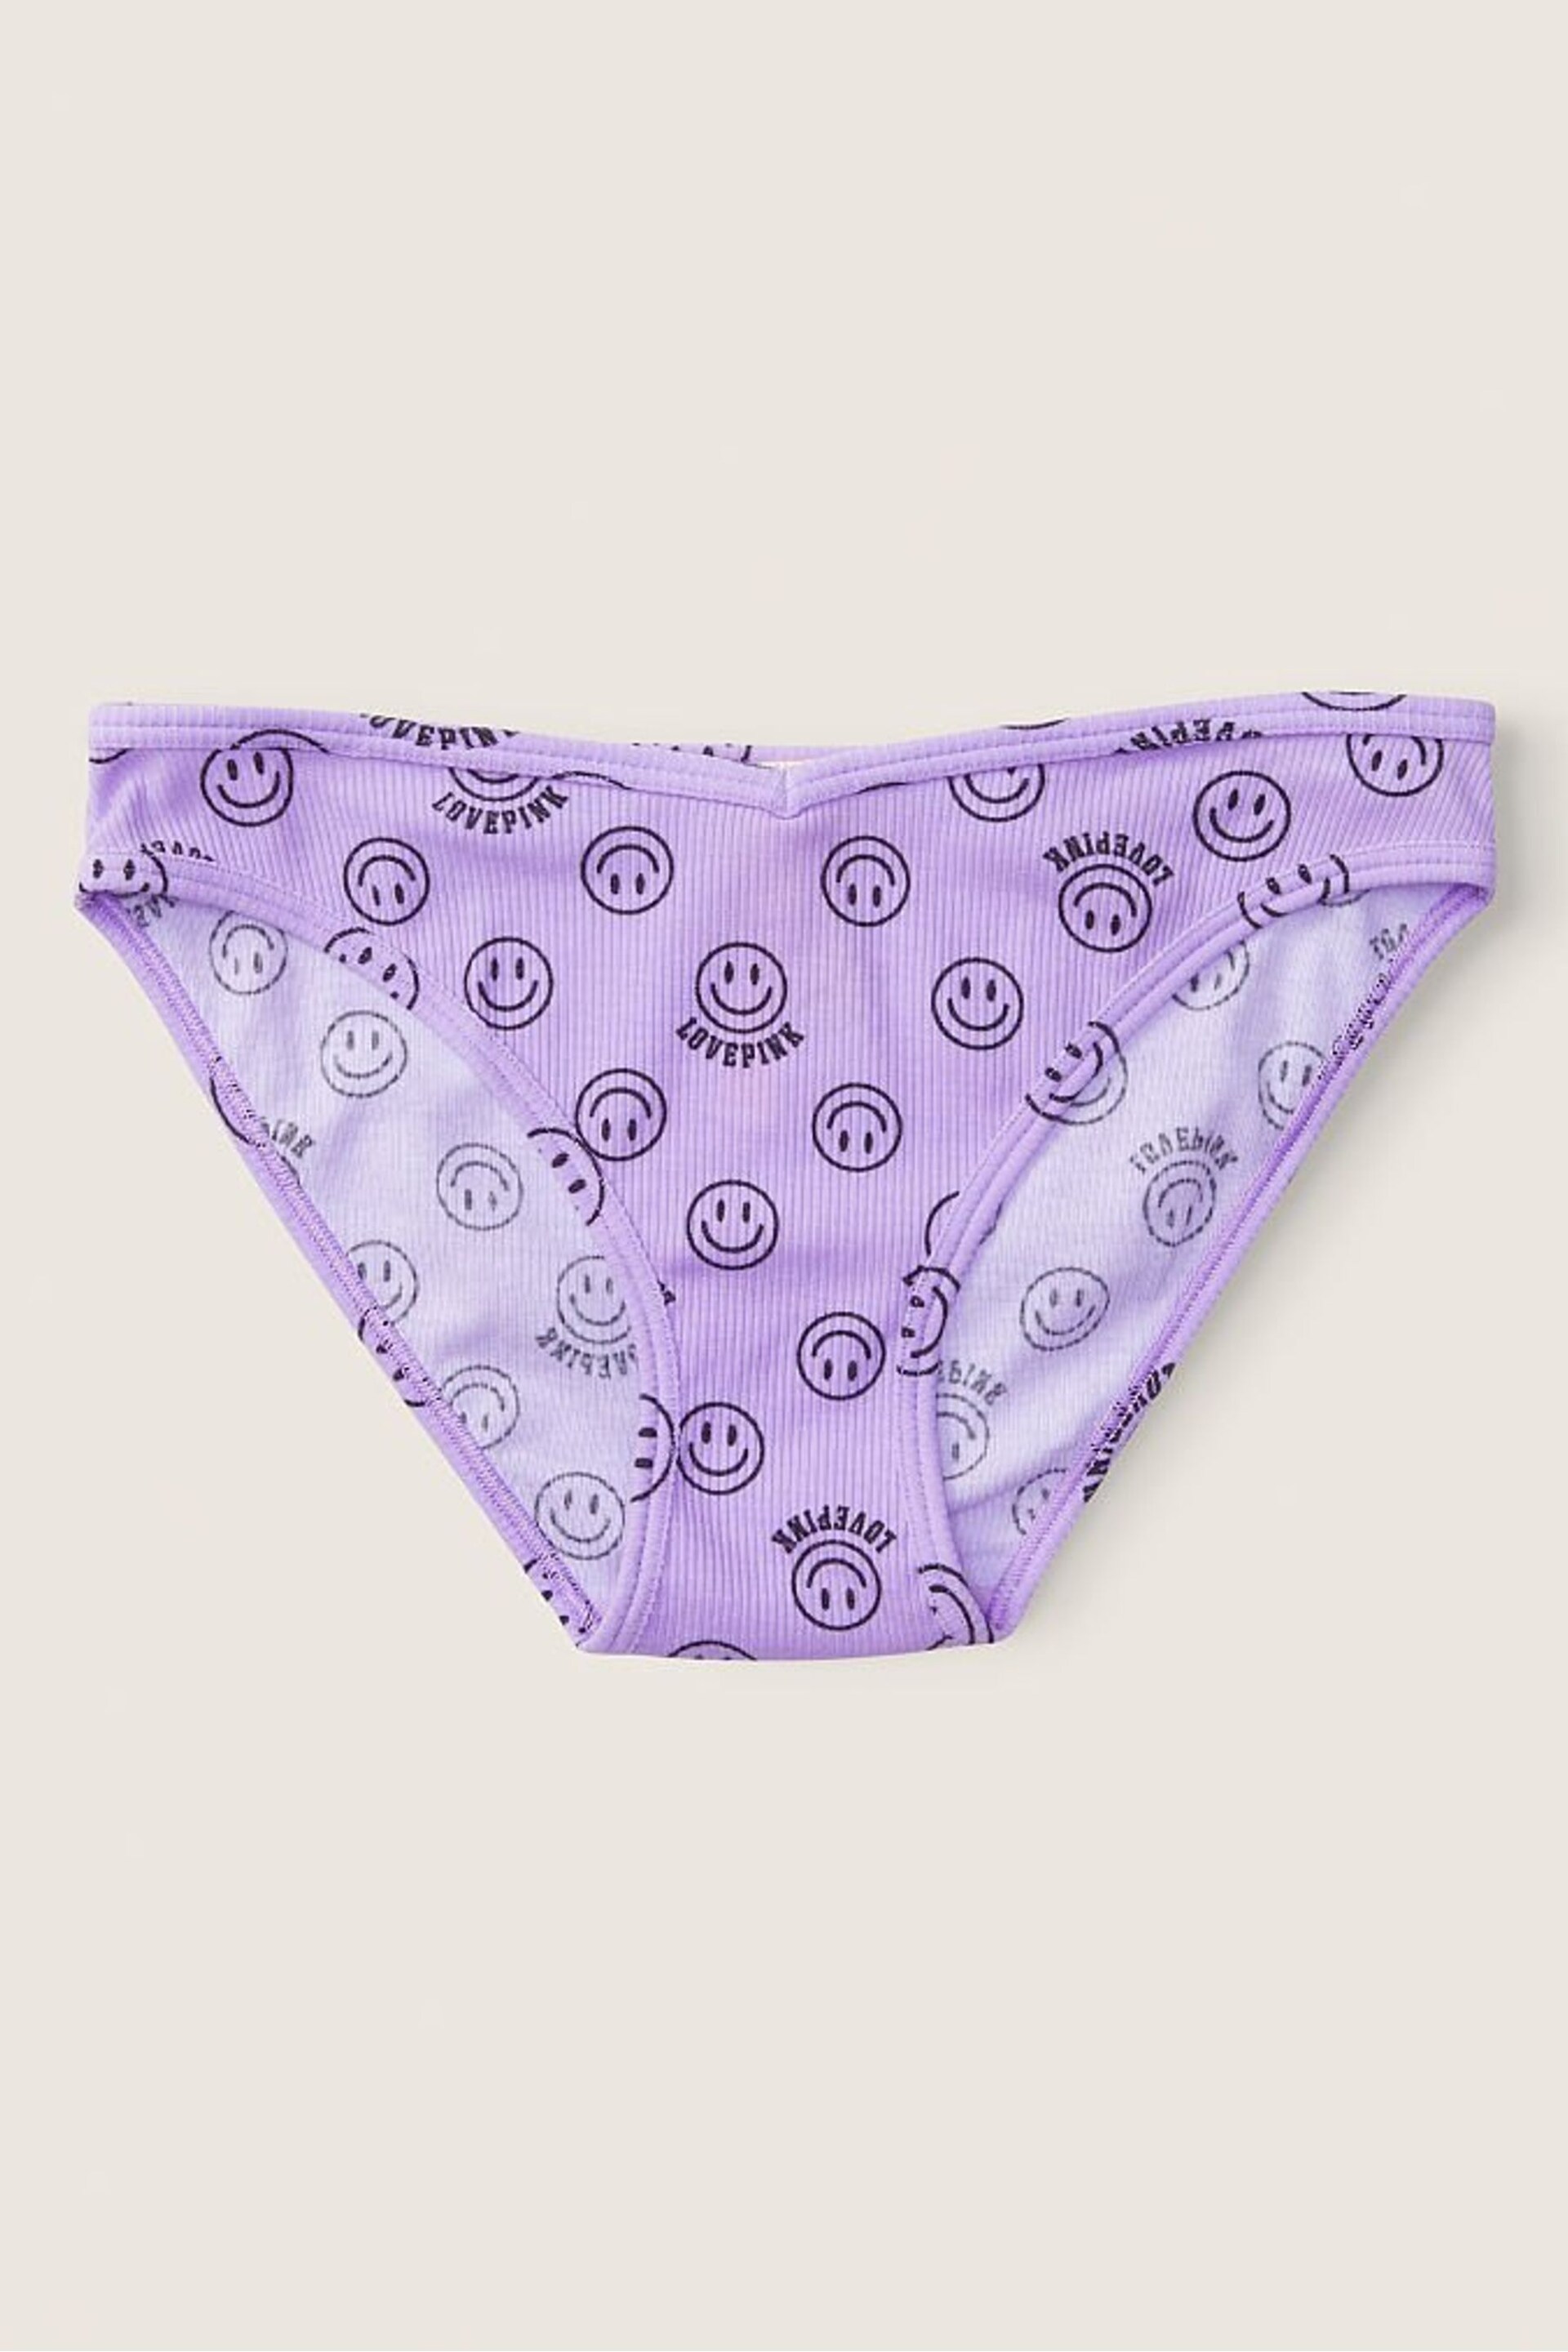 Victoria's Secret PINK Lavender Love Smiley Print Purple Cotton Bikini Knickers - Image 1 of 1